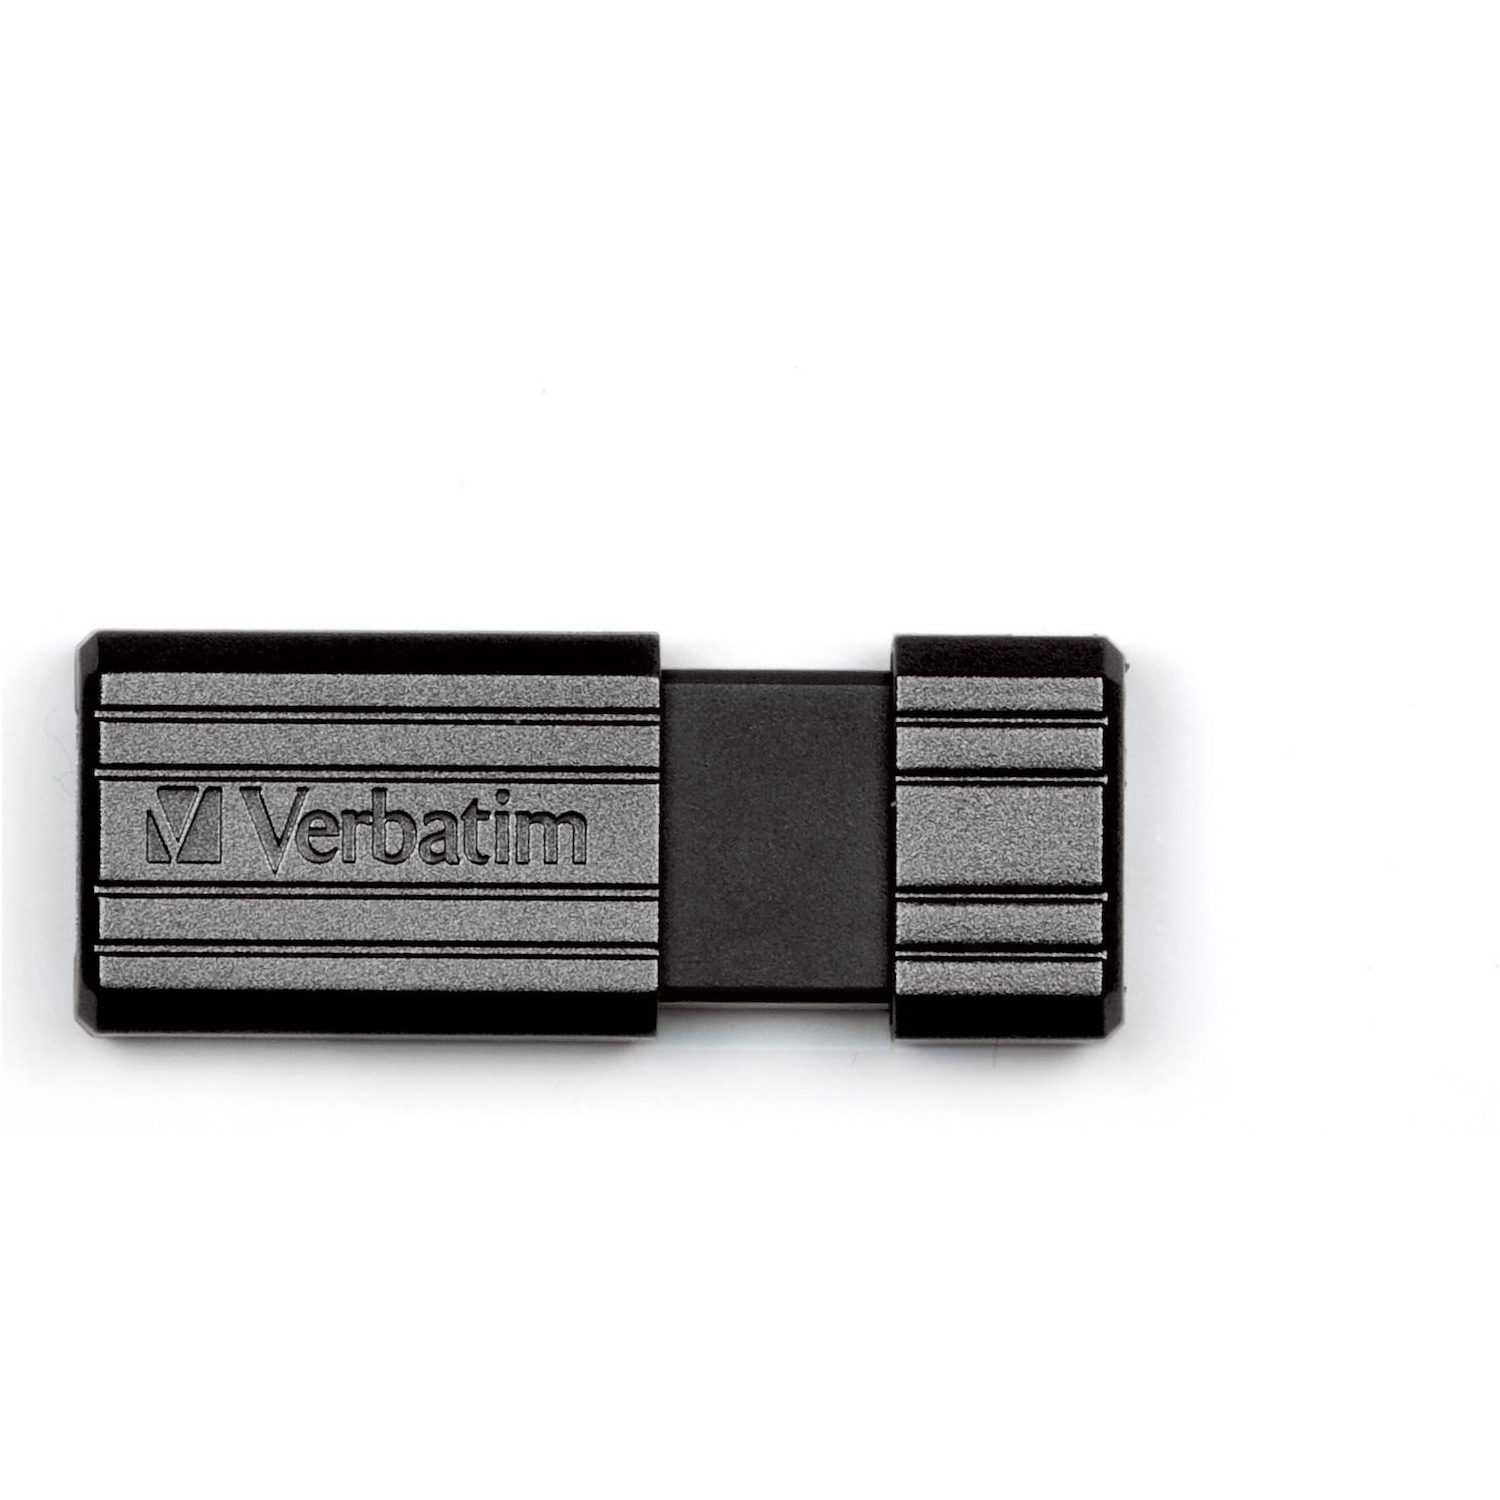 Immagine per Memoria USB Verbatim Pinstripe 32 GB nero da DIMOStore